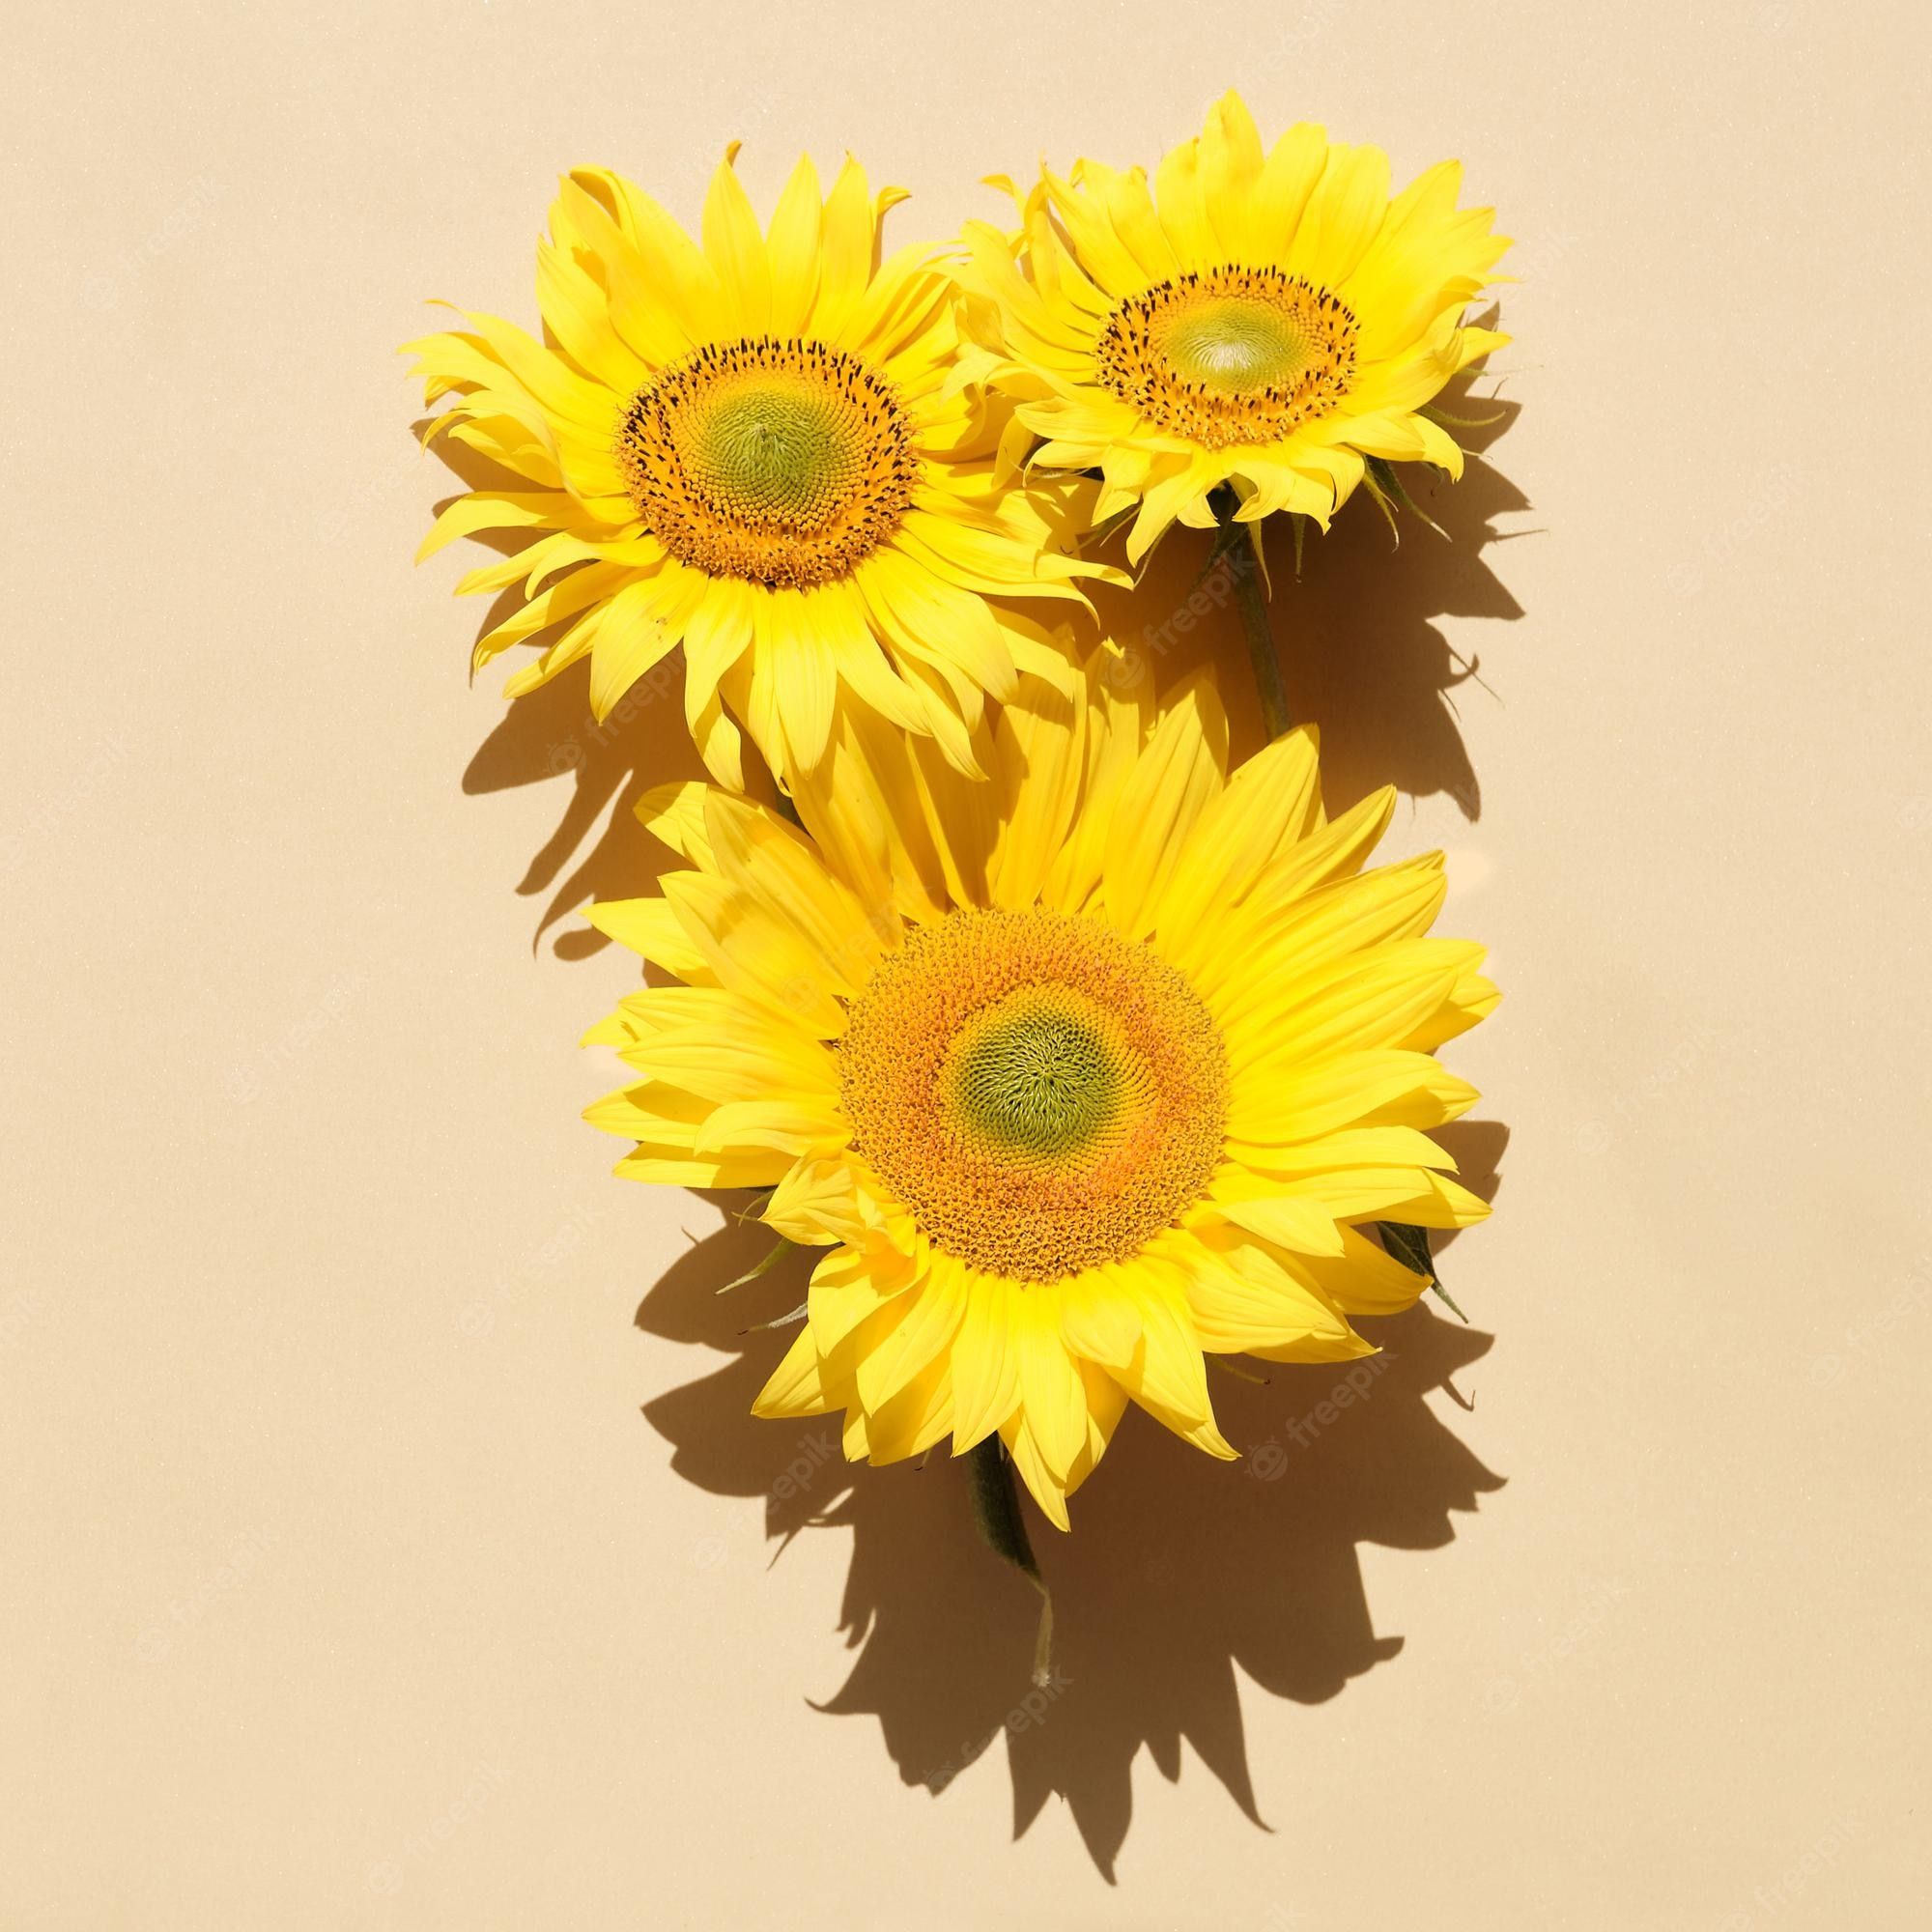 Three yellow sunflowers on a beige background - Sunflower